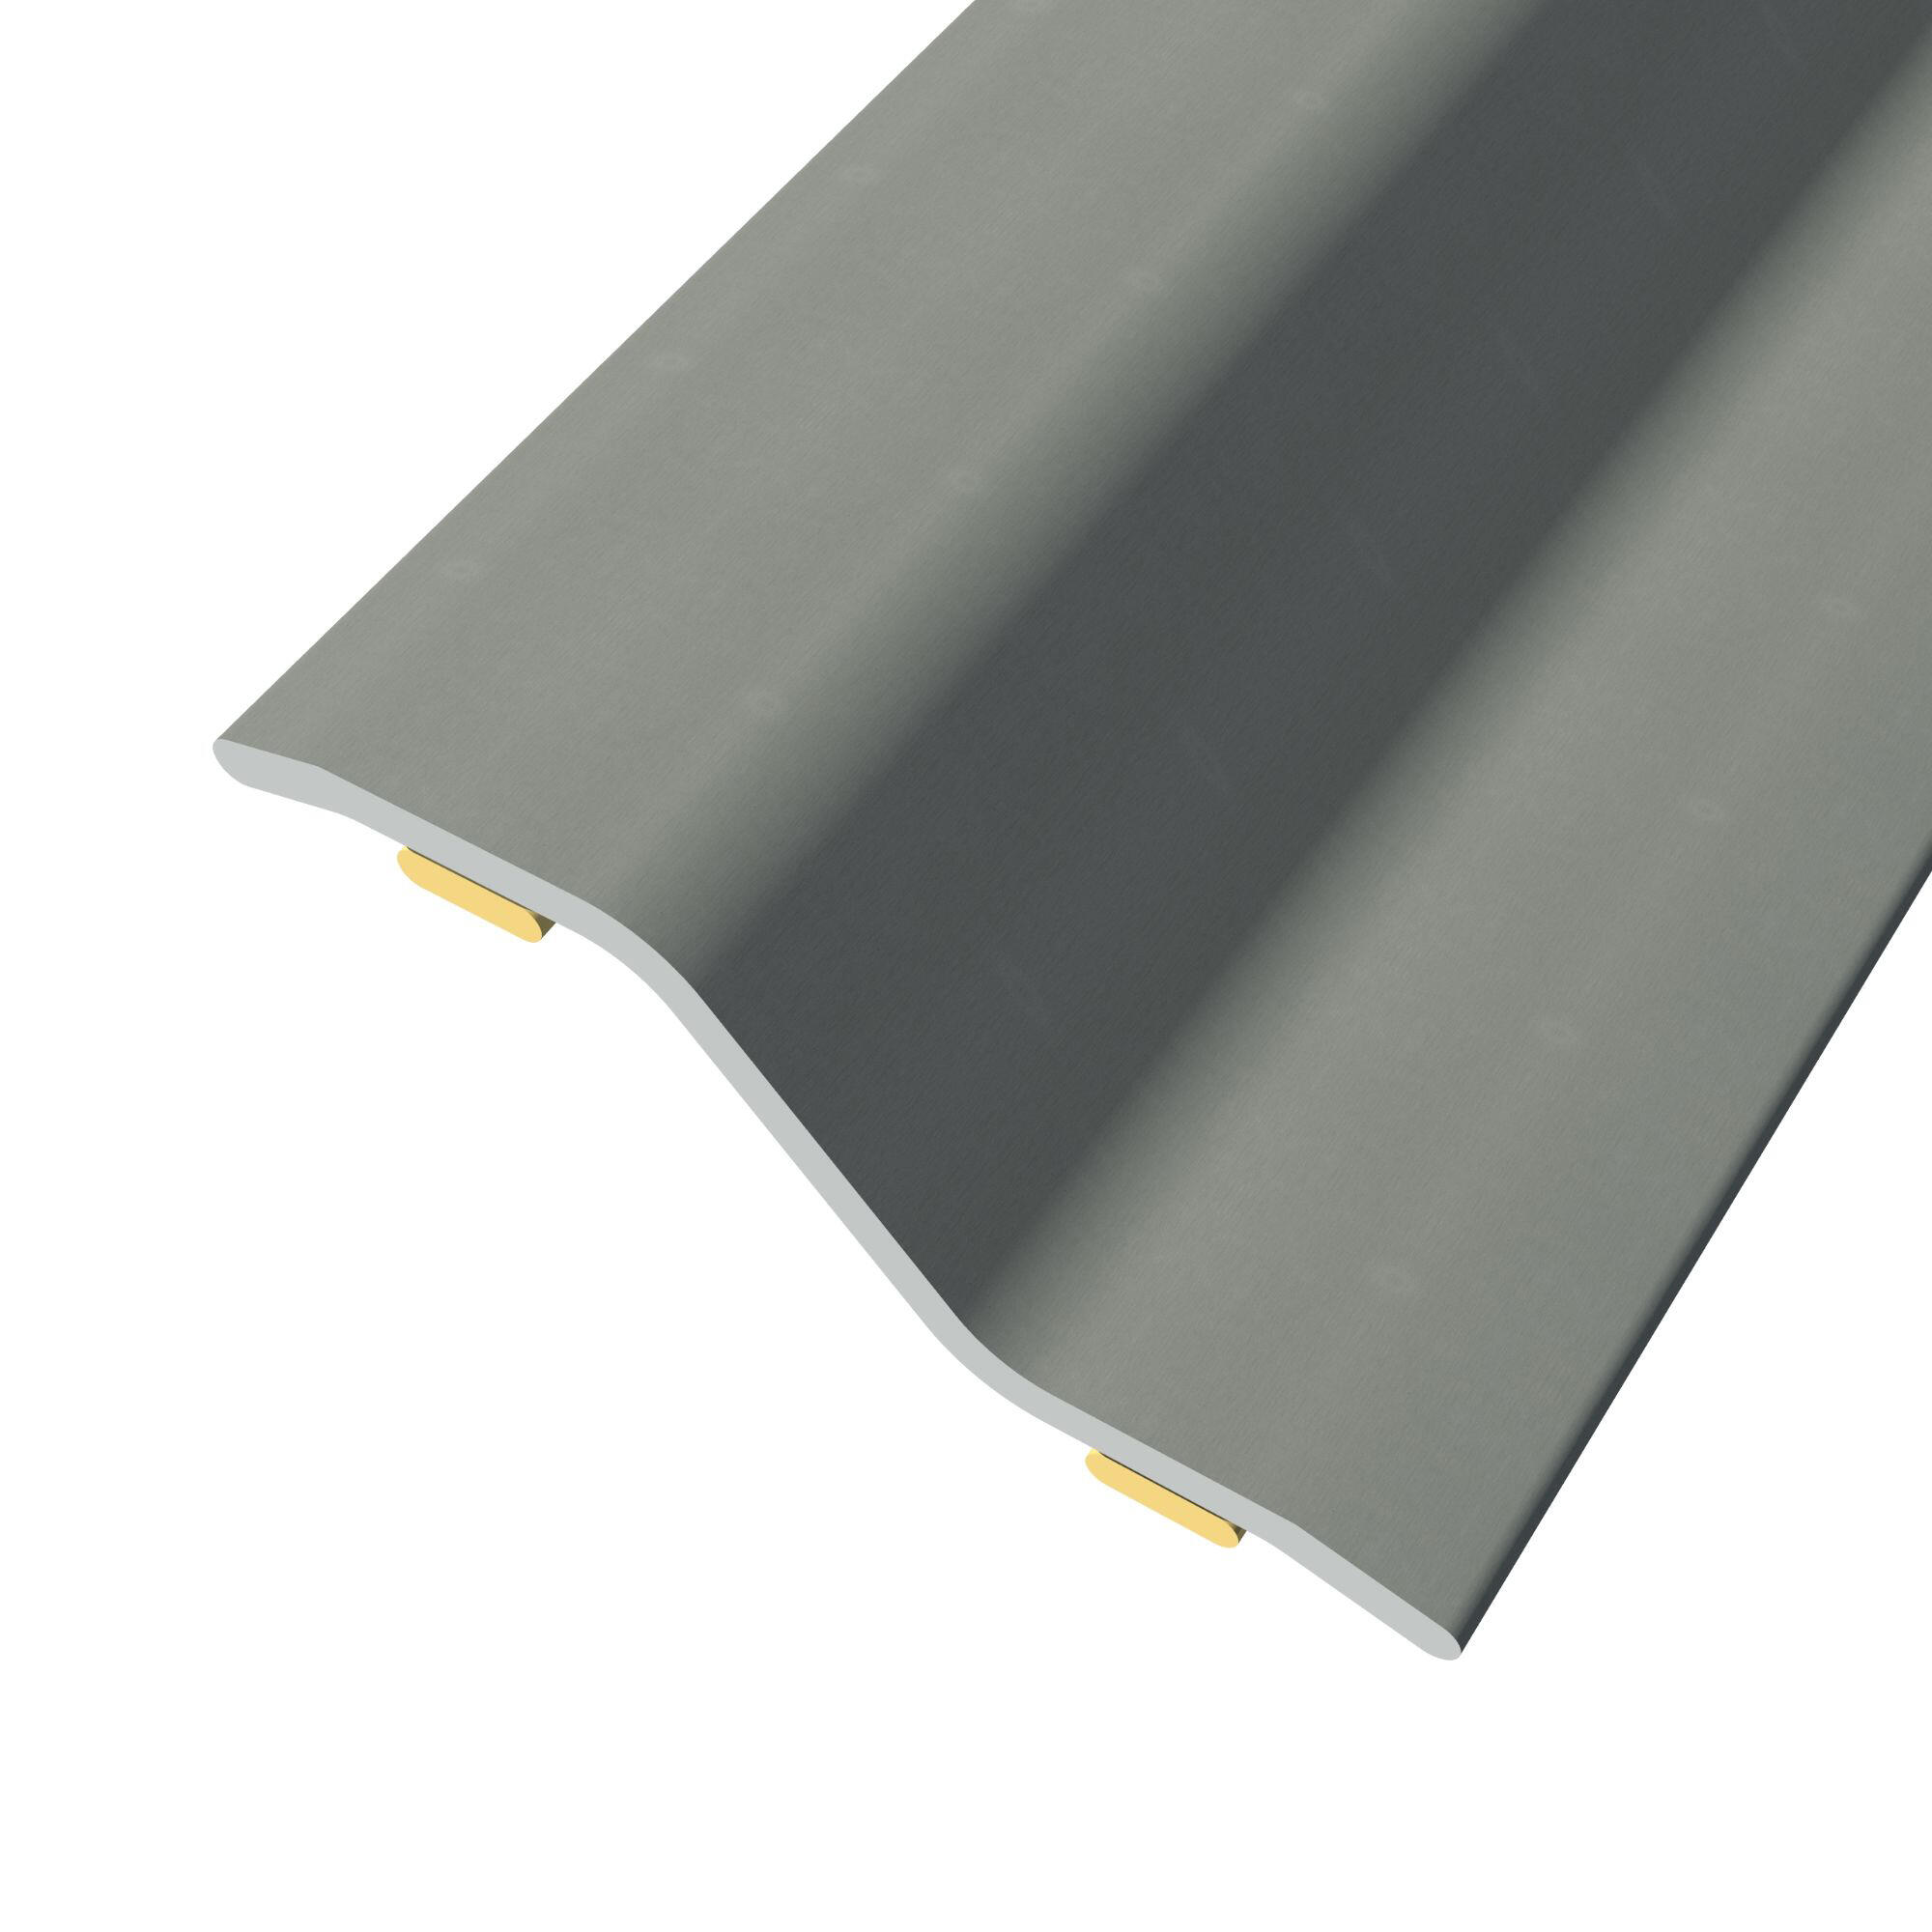 Diferencia de nivel de aluminio gris / plata 93 cm mod054